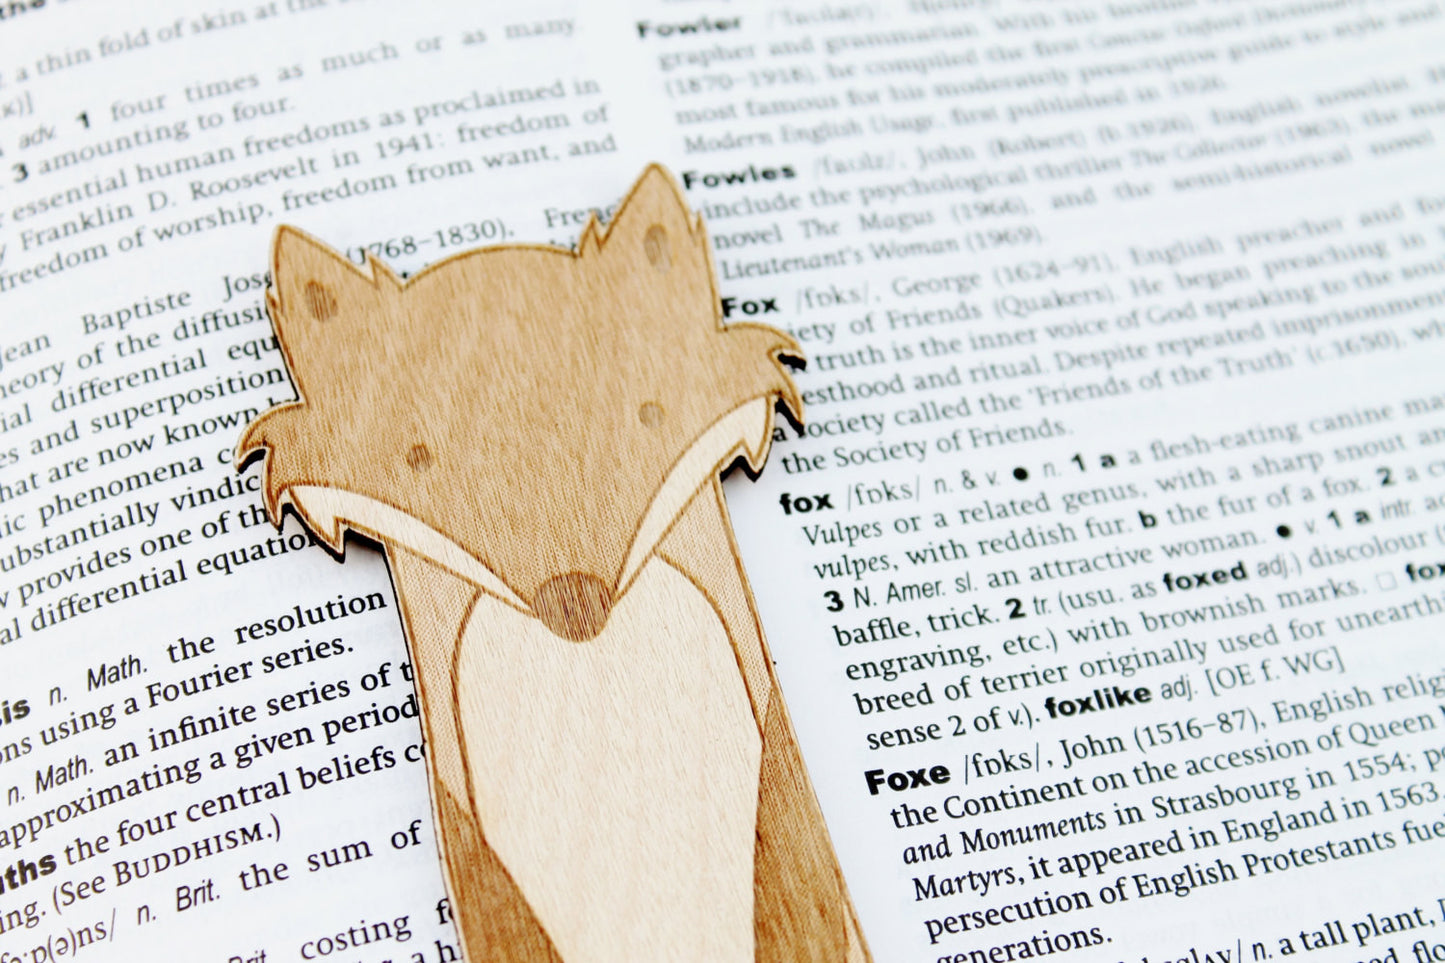 Cunning Fox Wooden Bookmark